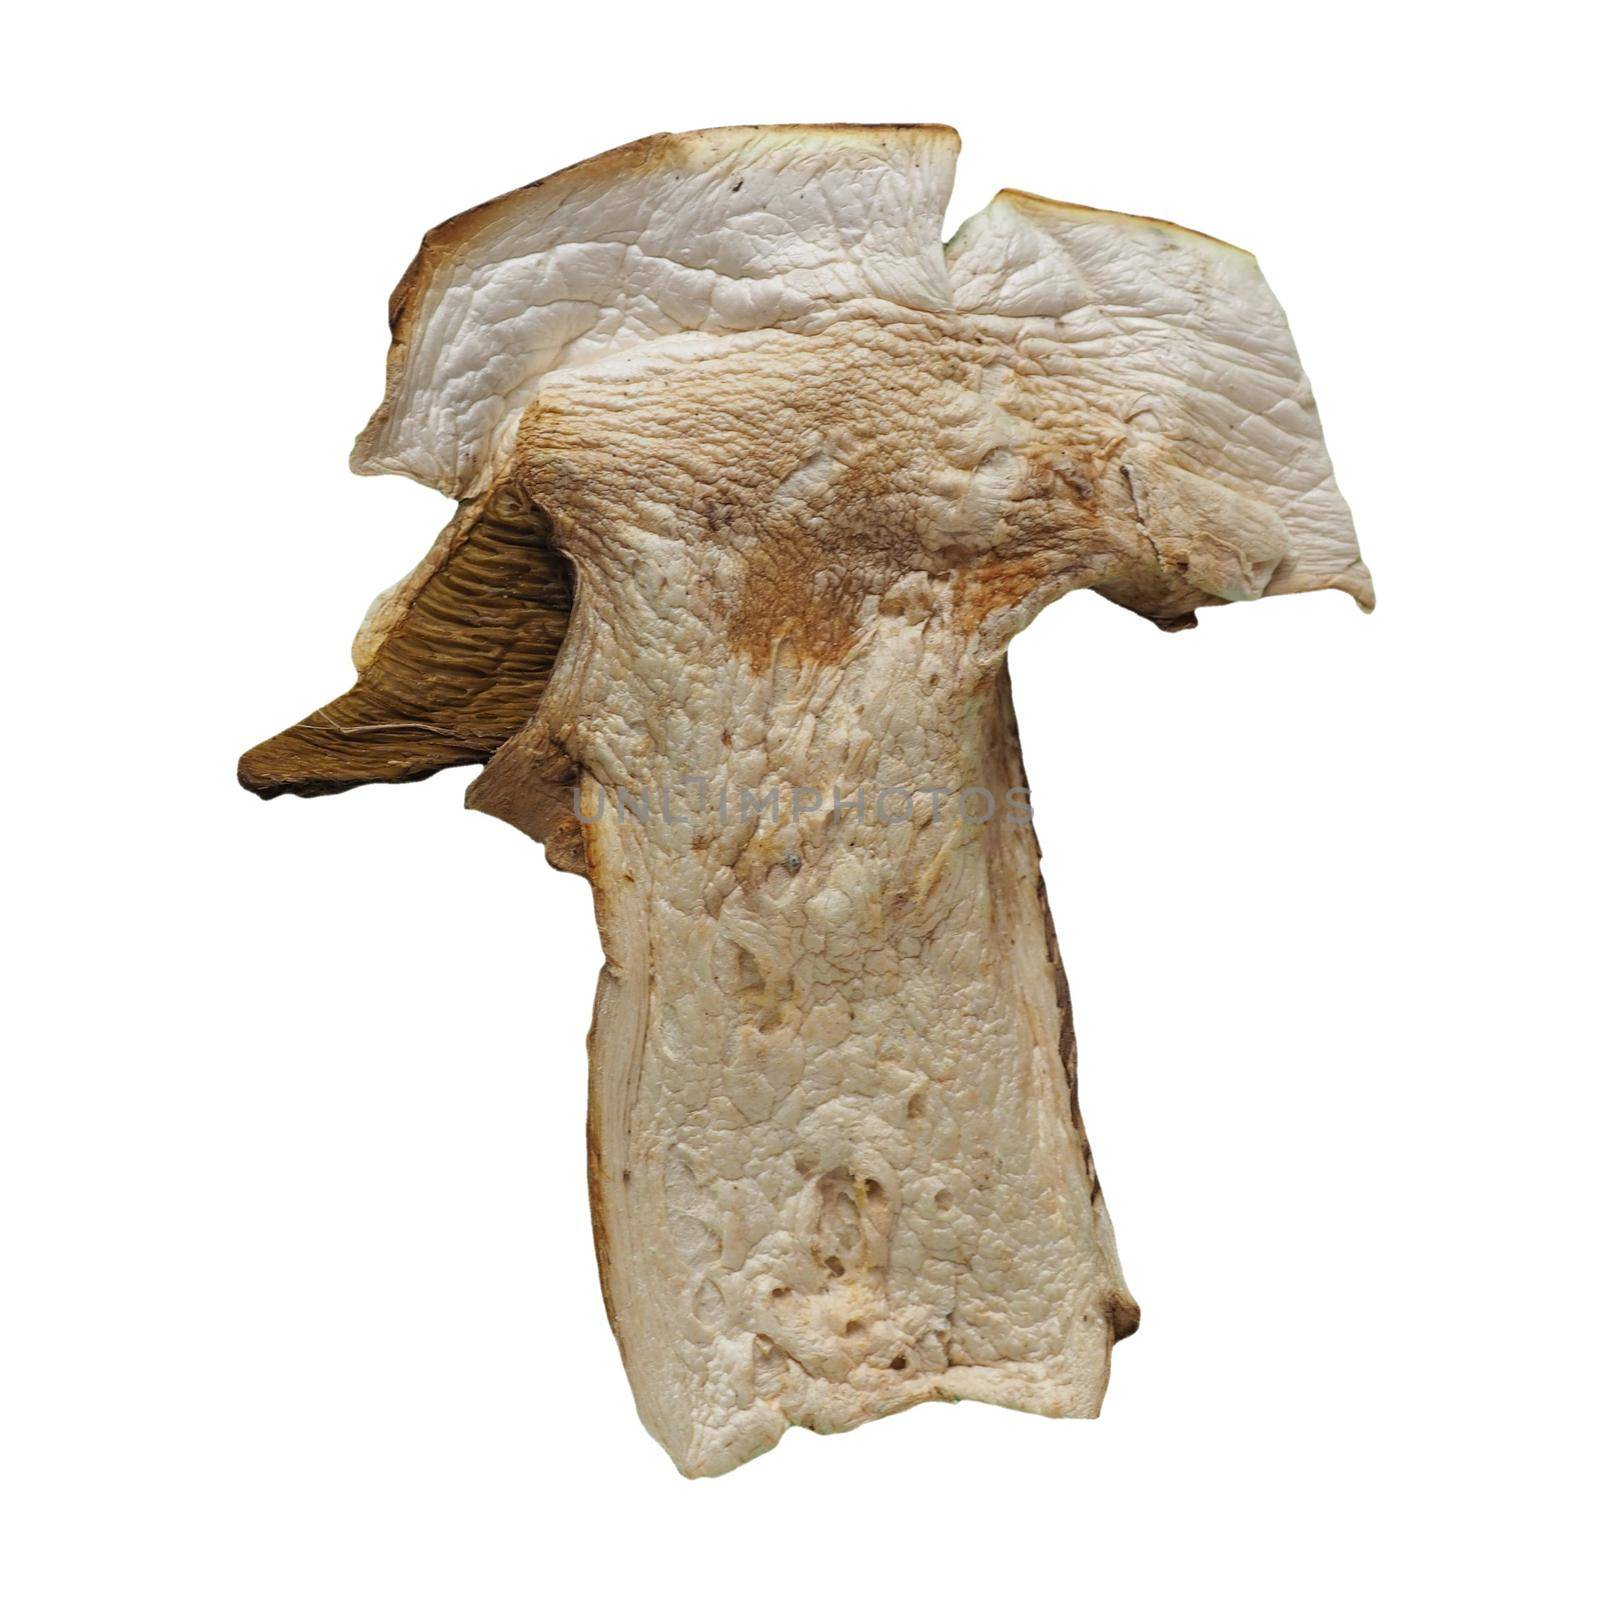 dried porcini (Boletus edulis) mushroom vegetarian food isolated over white by claudiodivizia